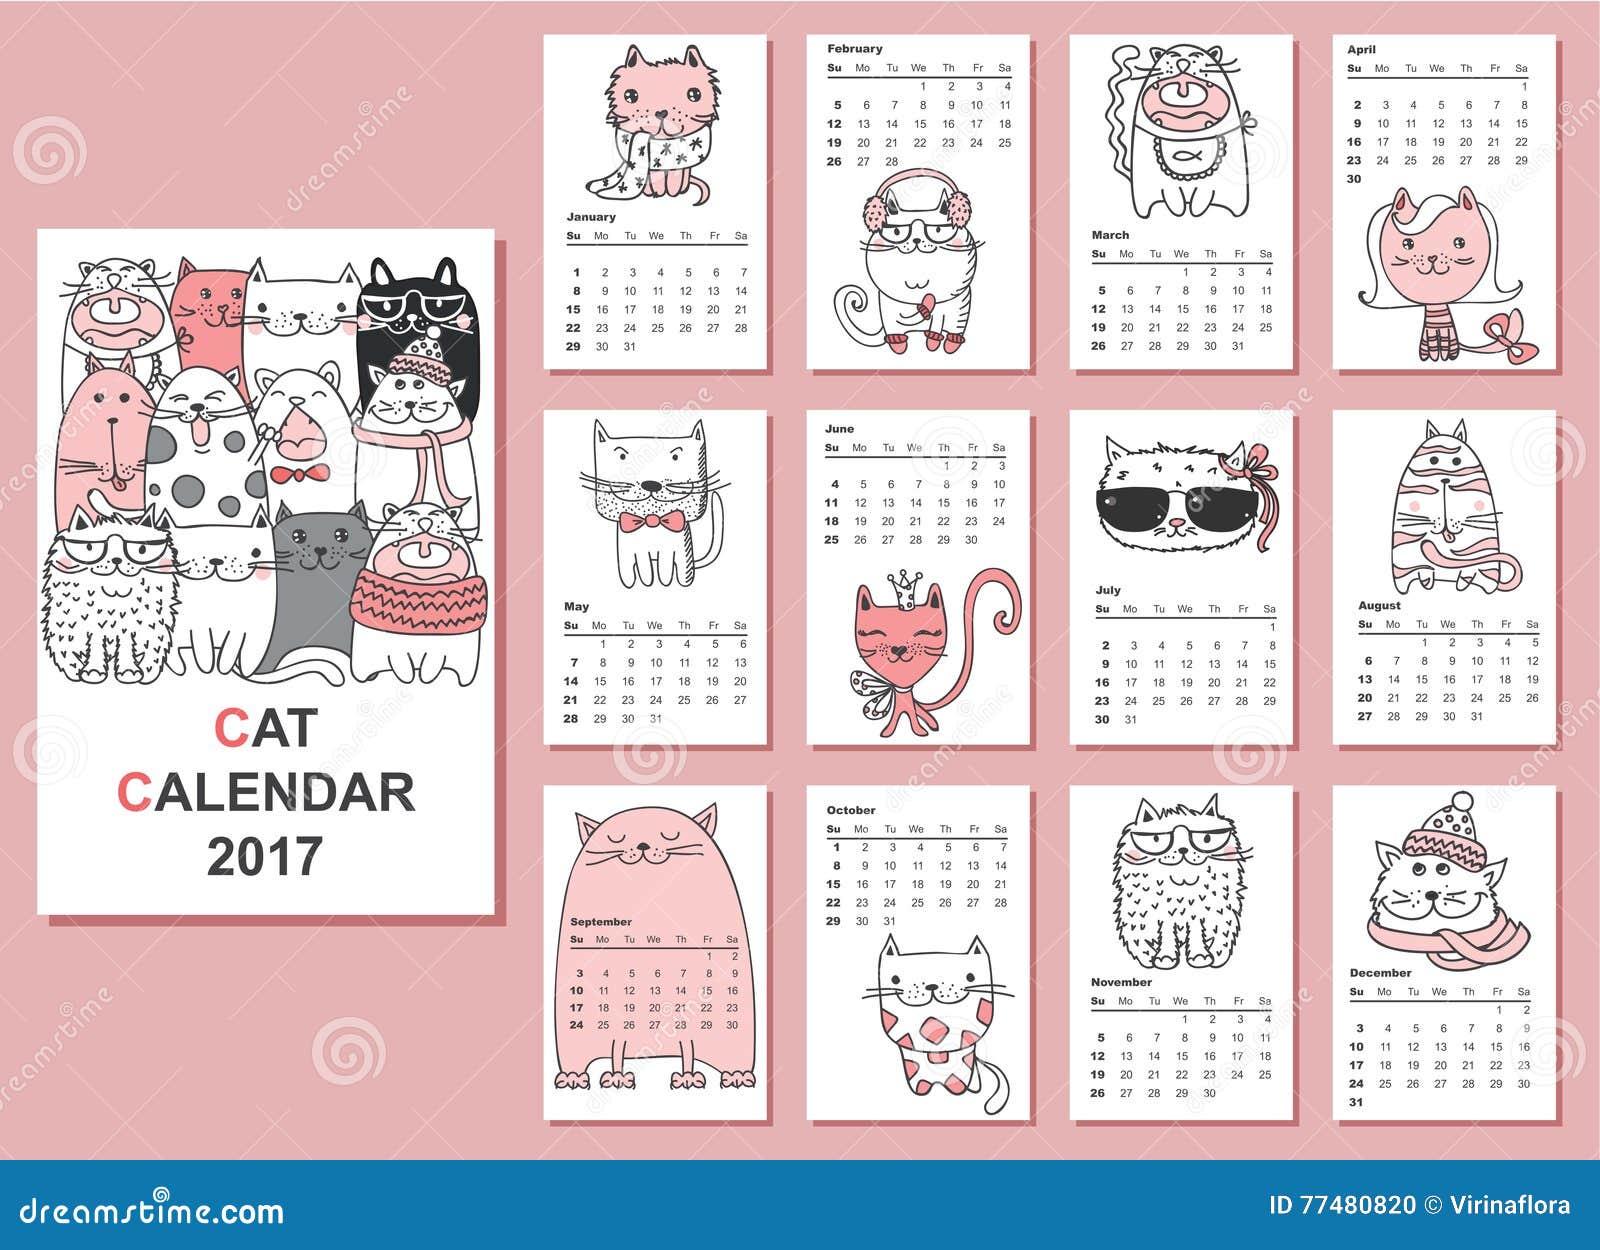 Cats calendar 2017 stock vector. Illustration of card - 77480820